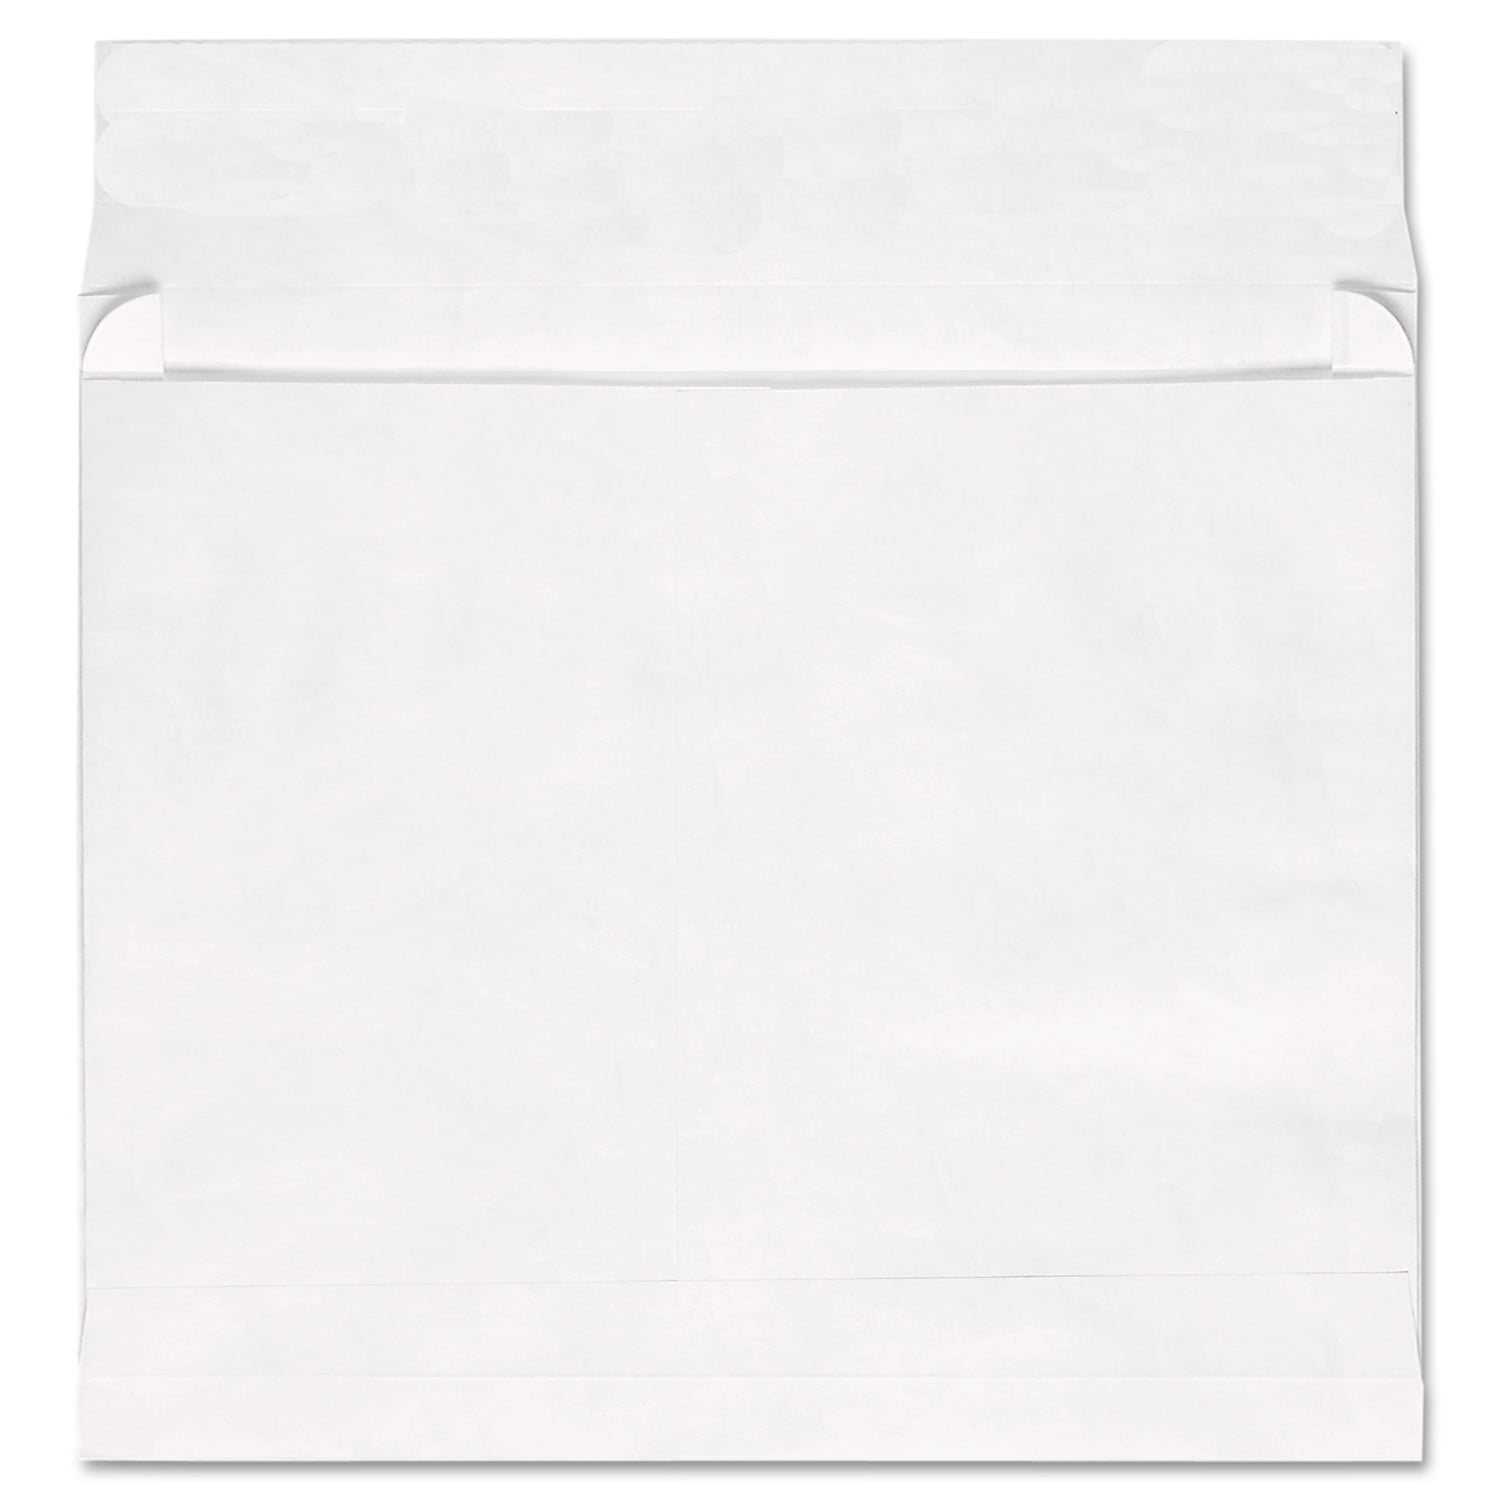 10 x 13 Tyvek Envelopes 10 Envelopes 10 x 13 Envelopes Bright White with Release Strip 975 Supply Tyvek Envelopes; Easy Security Peel & Seal Closure 